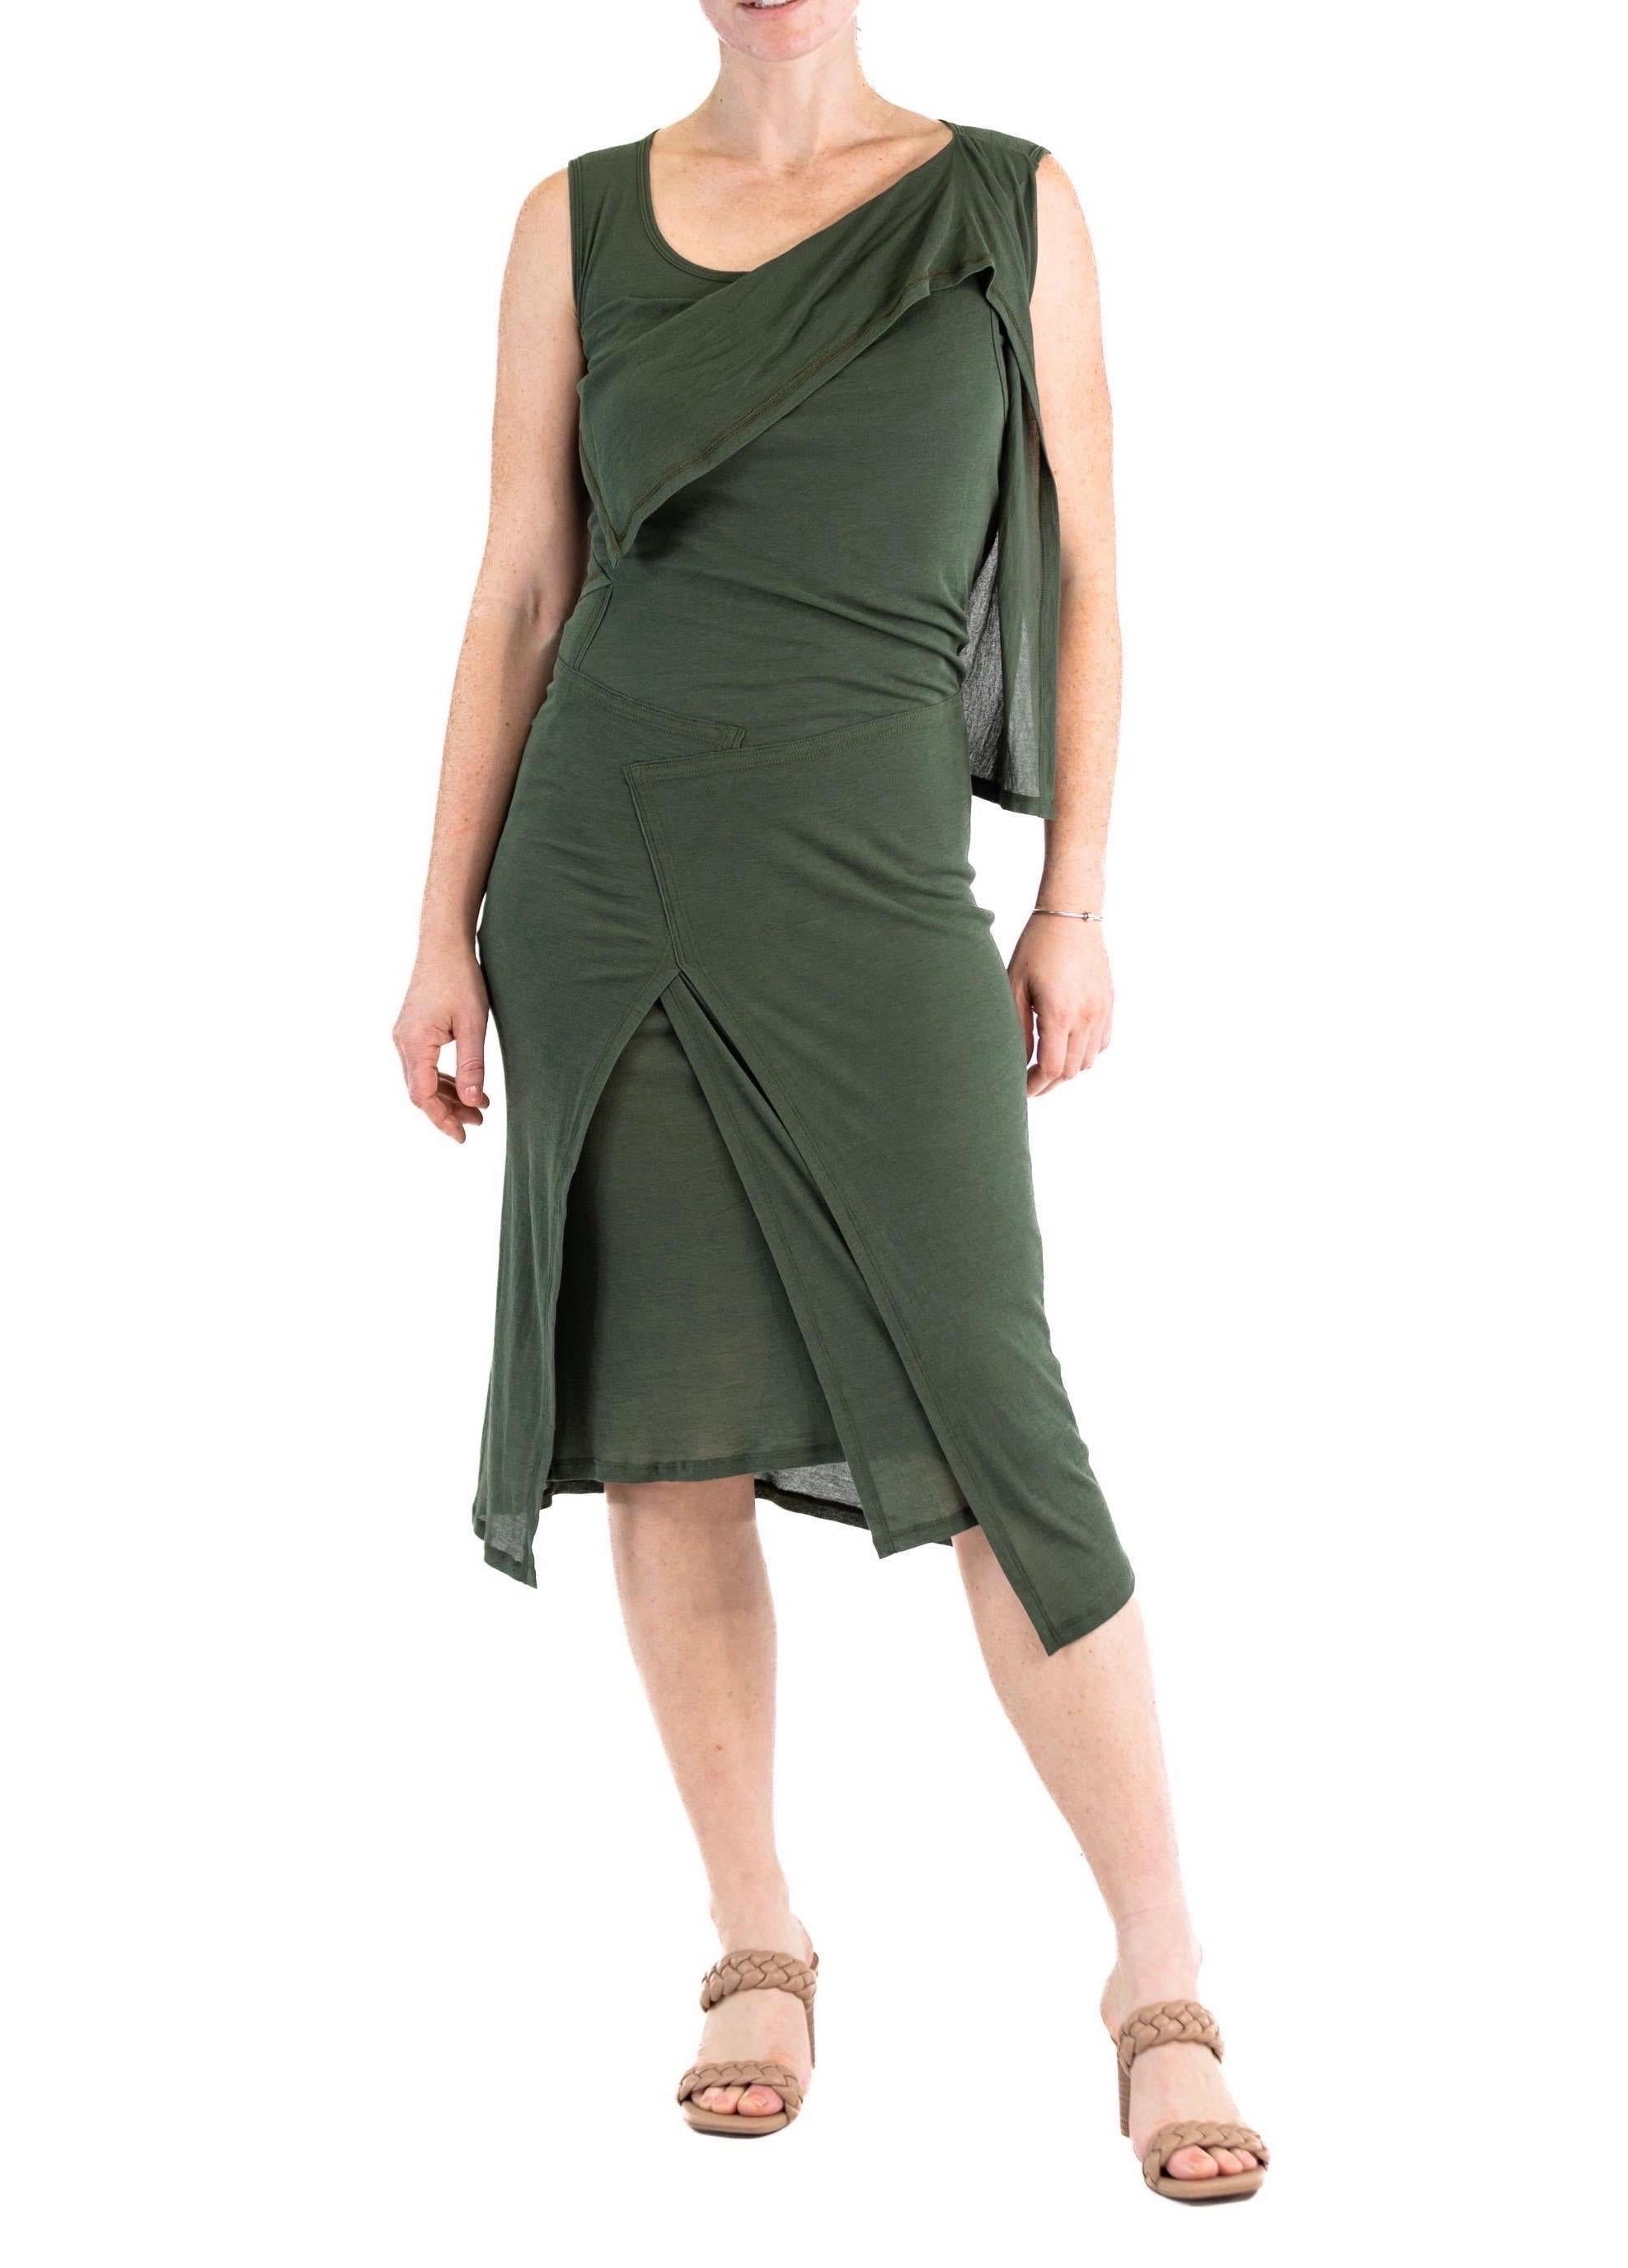 2000S ISSEY MIYAKE Olive Green Rayon Knit Asymmetrically Draped Dress 2